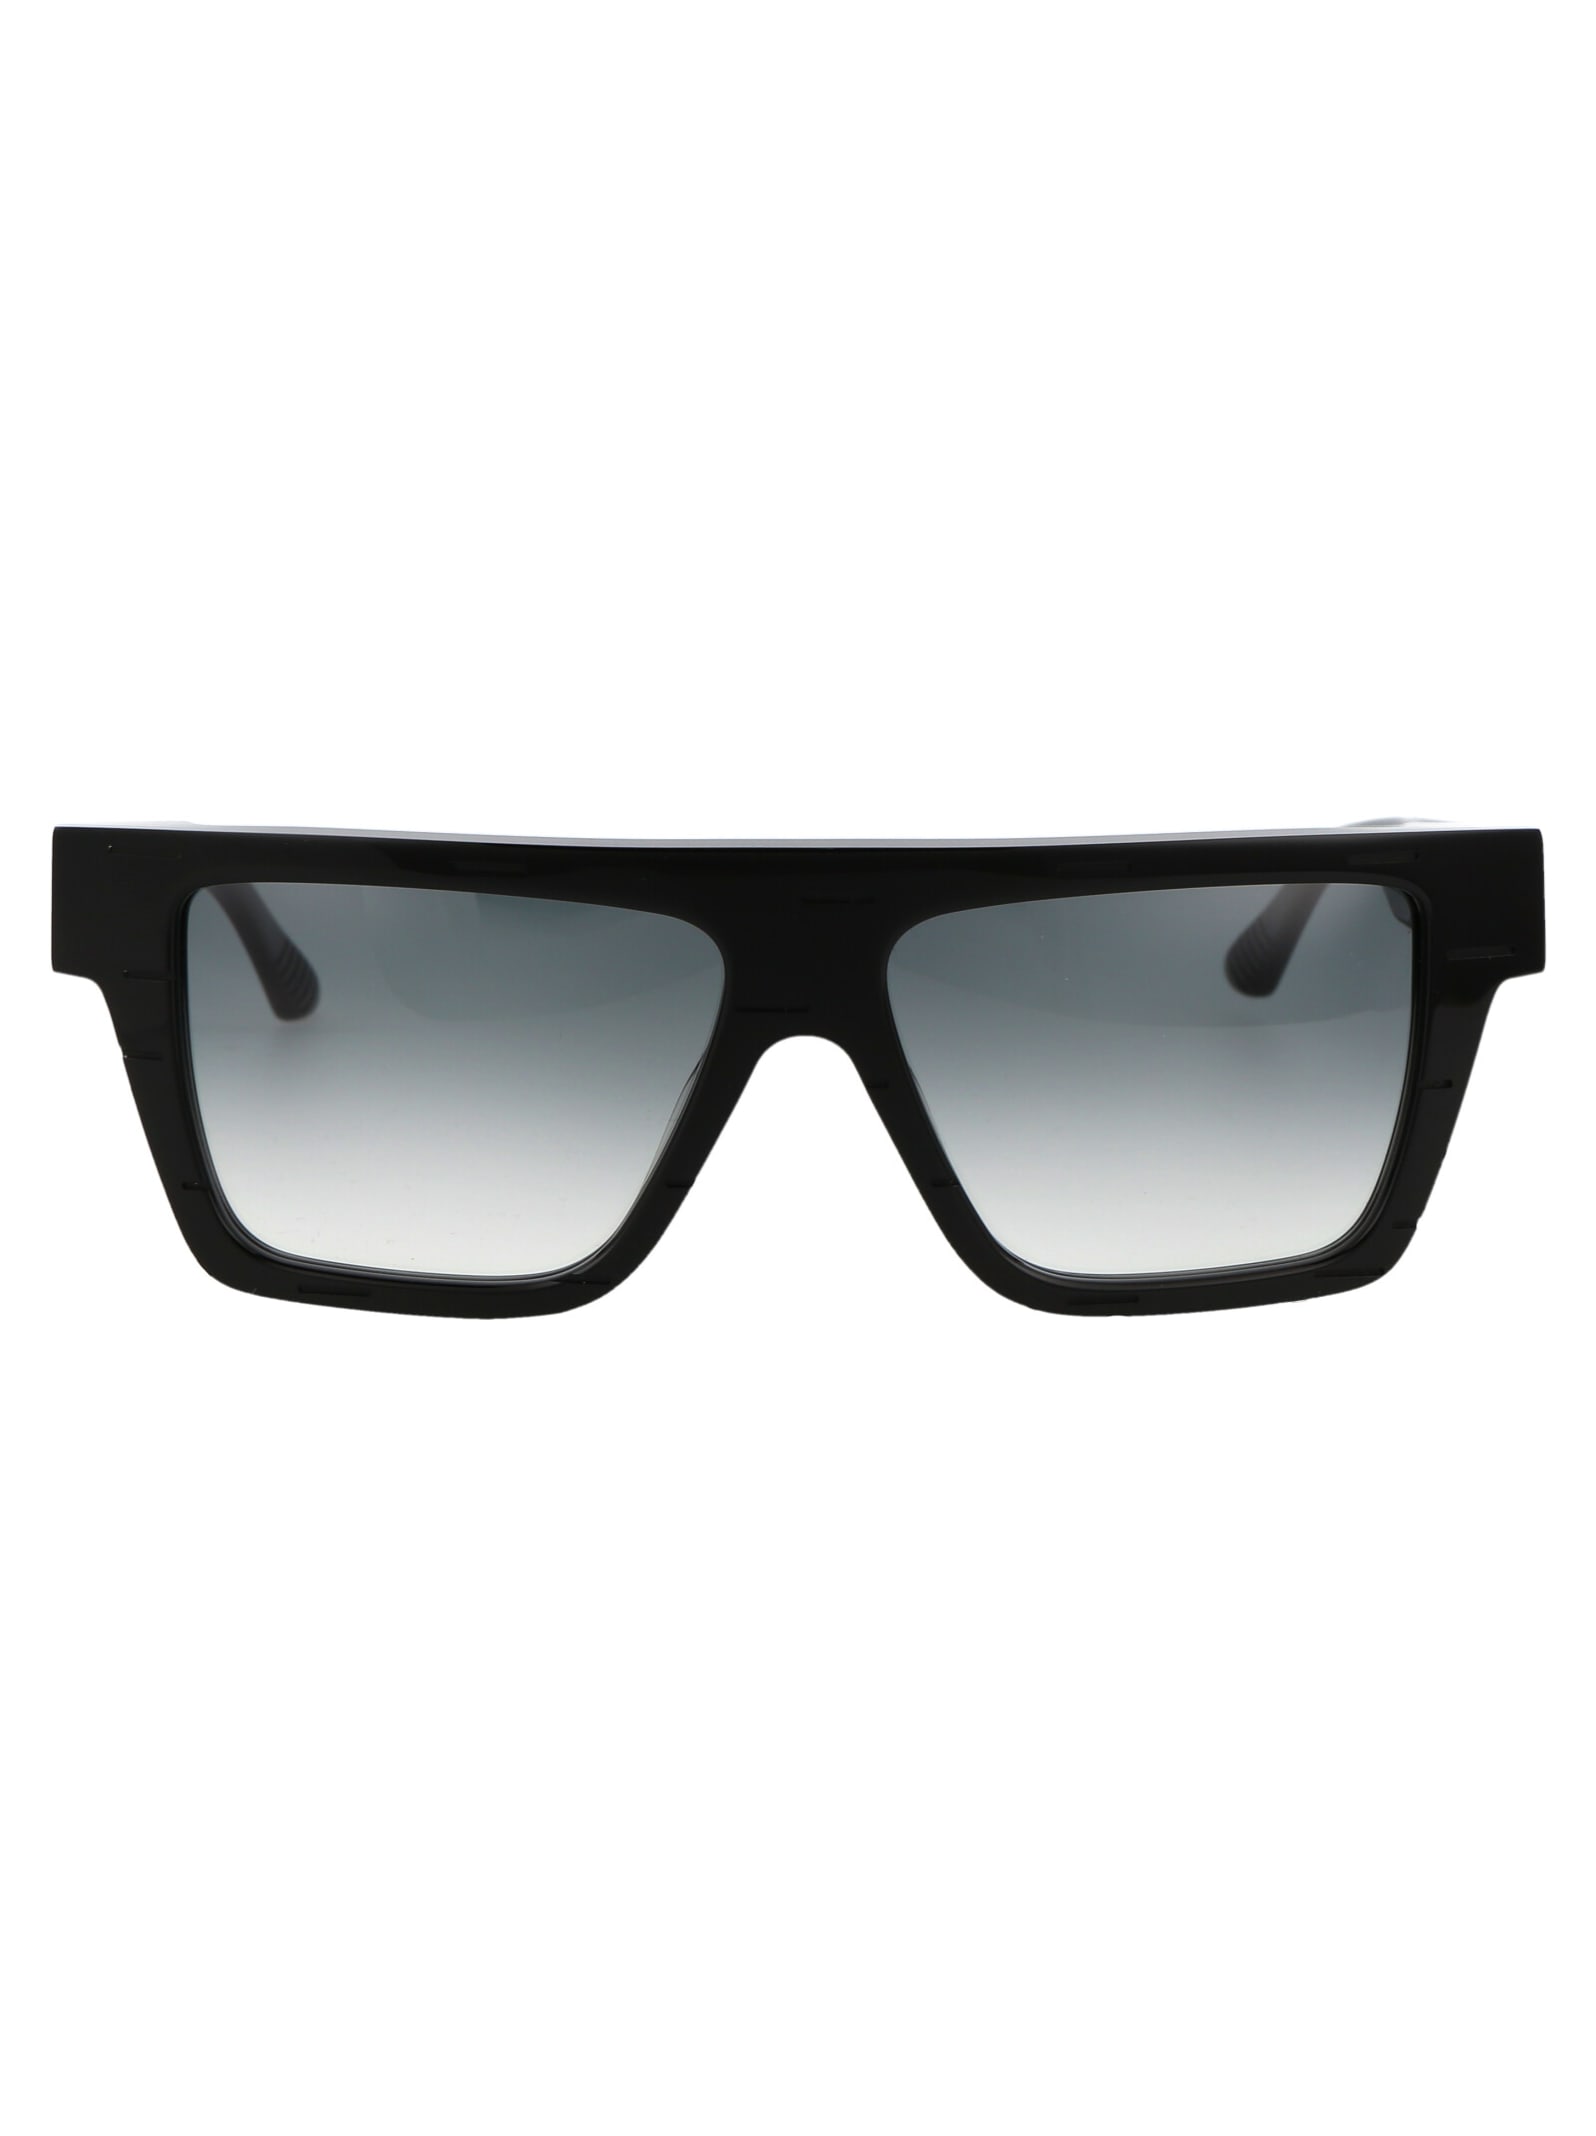 Yohji Yamamoto Slook 002 Sunglasses